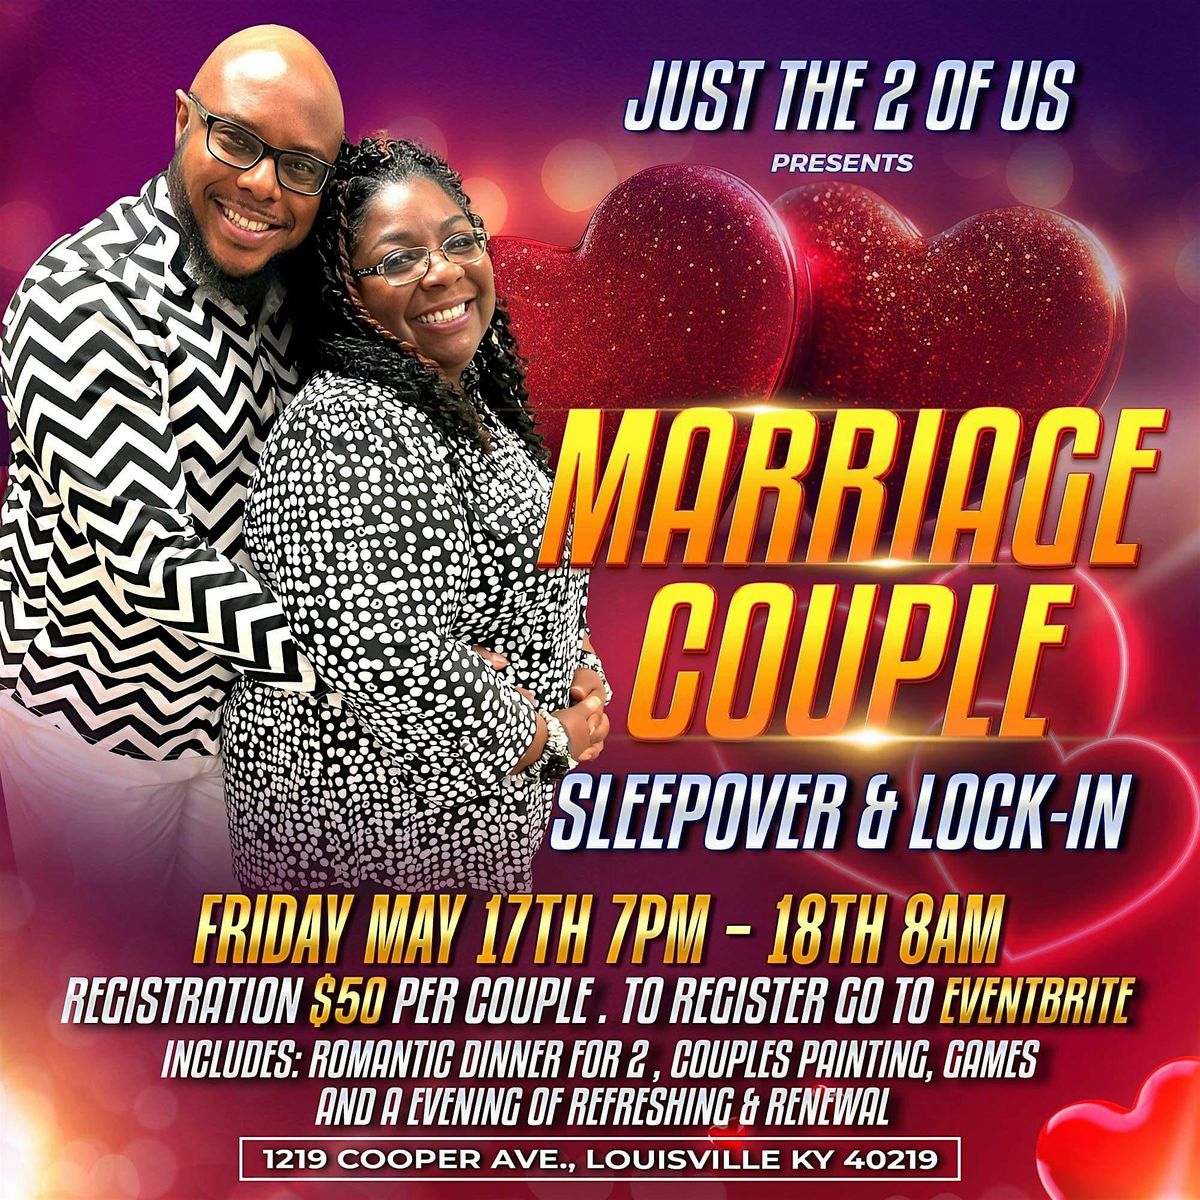 MARRIAGE COUPLE SLEEPOVER & LOCK-IN